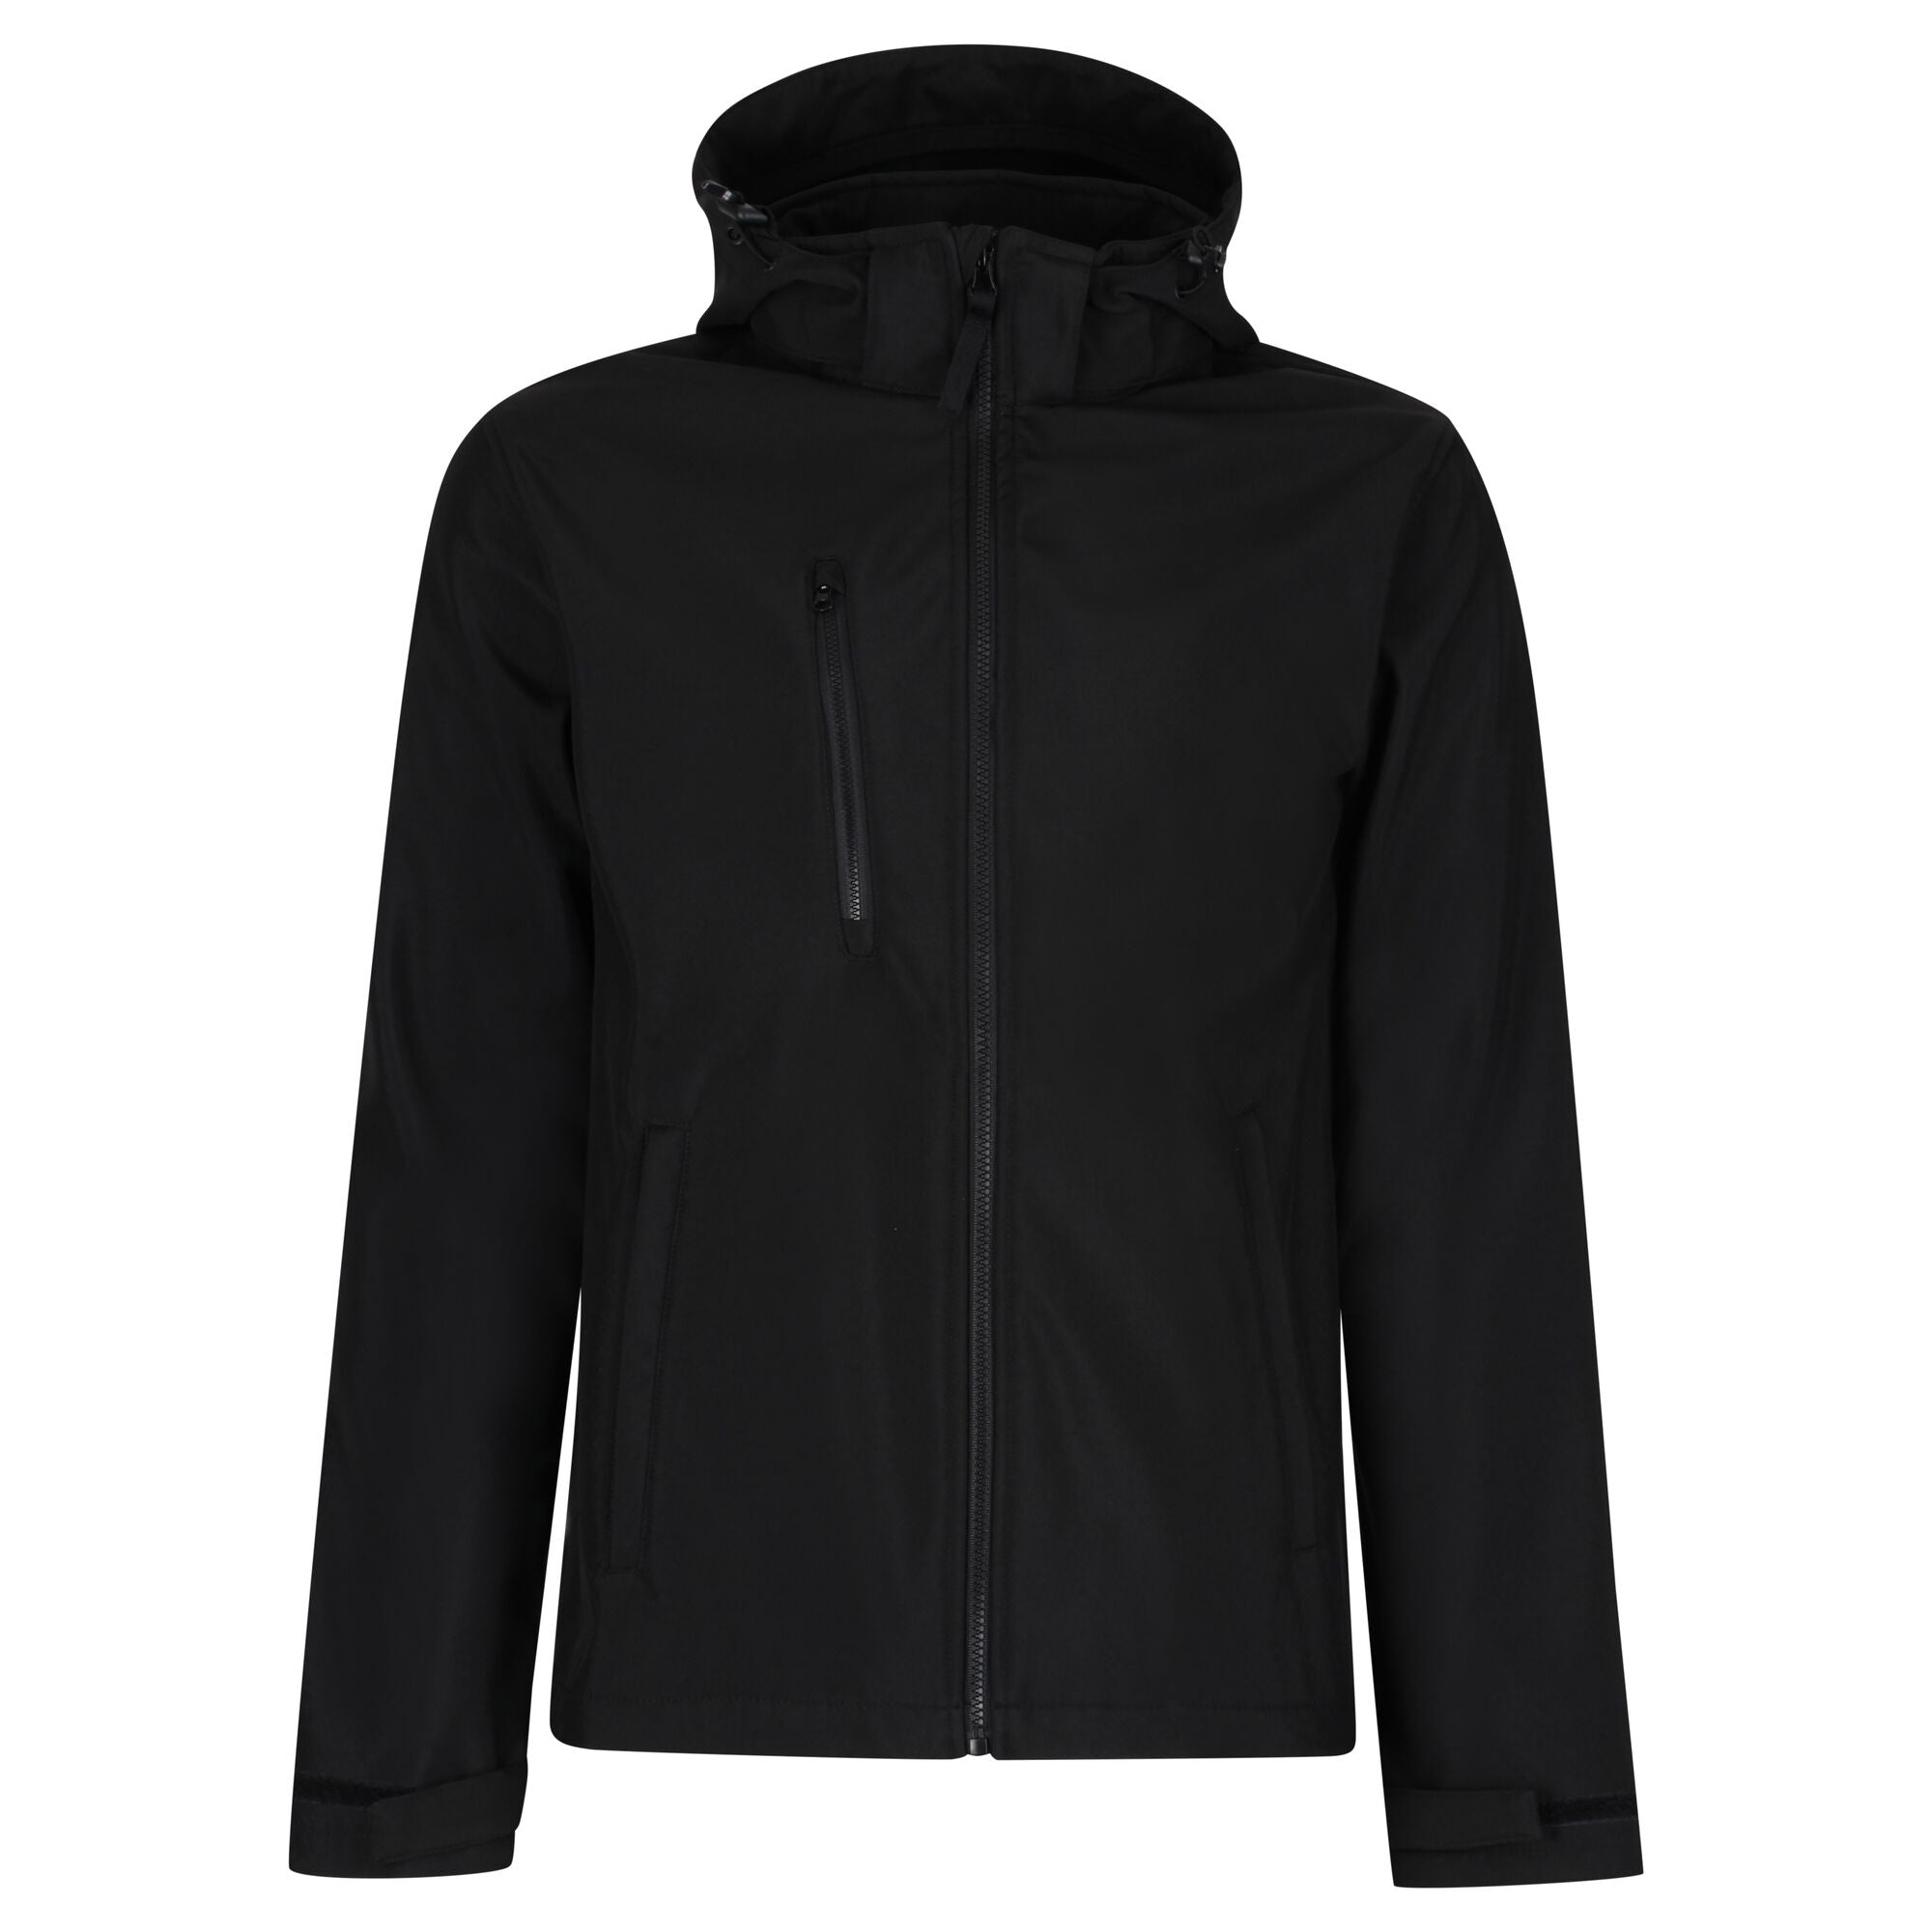 Regatta Venturer 3 Layer Softshell Jacket - Black